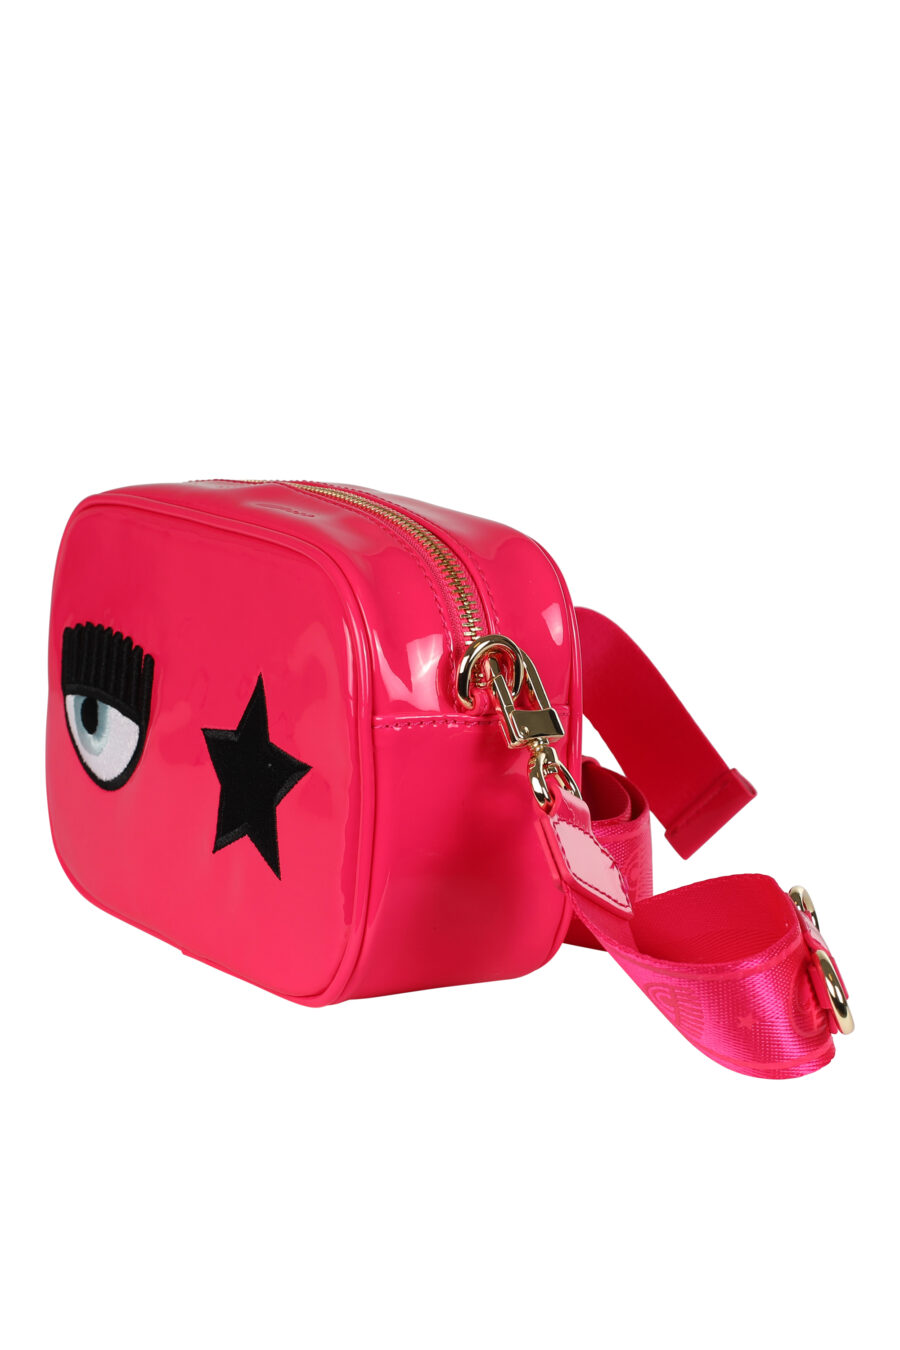 Fuchsia shoulder bag with eye and star logo - 8052672352408 2